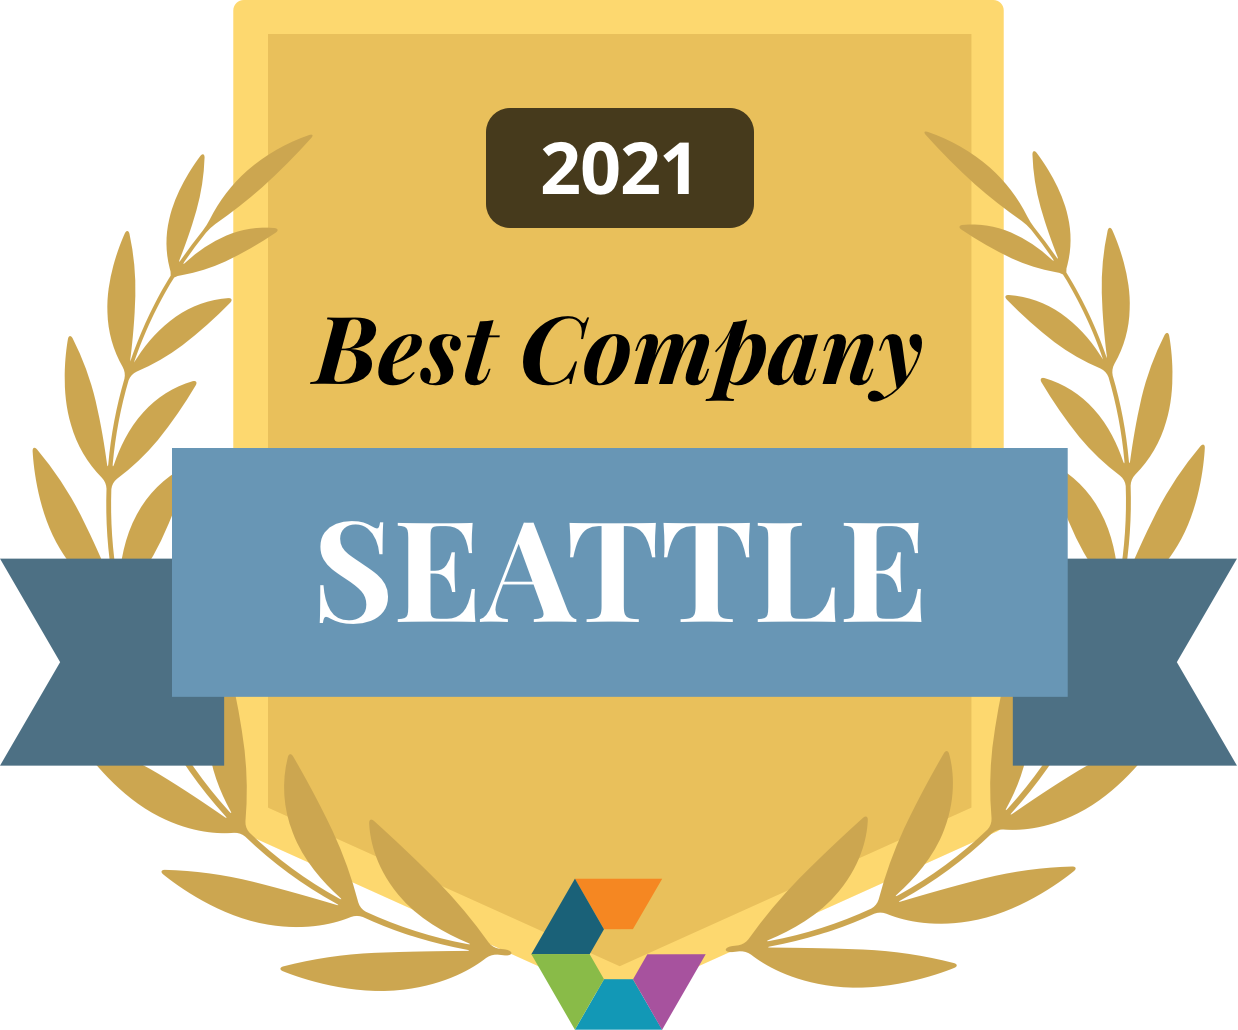 Comparably Award | Best Company Seattle 2021 | Smartsheet